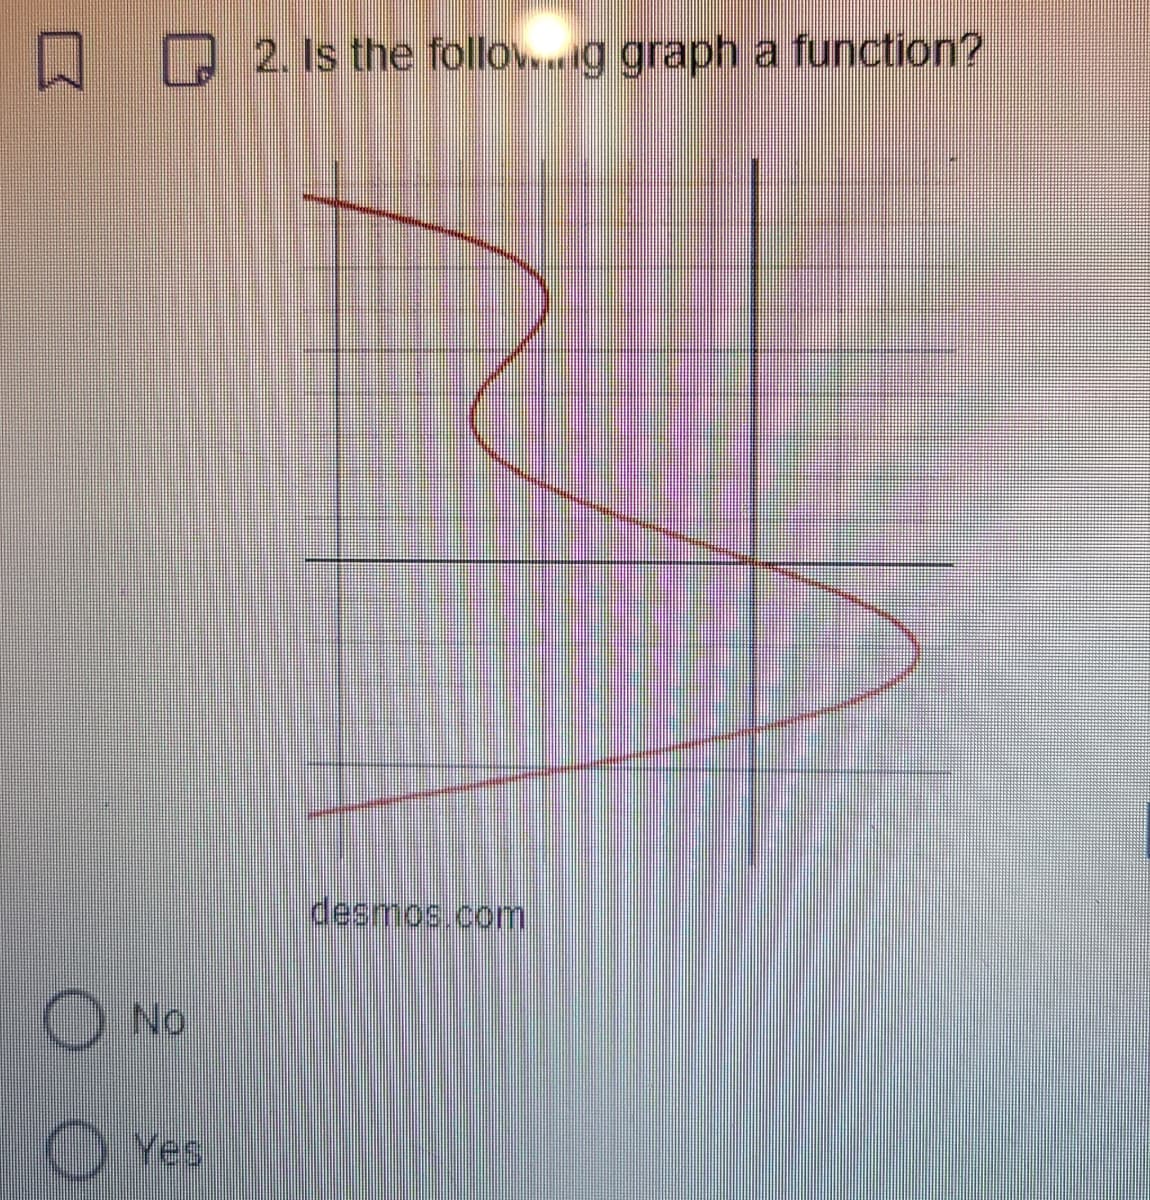 No
O Yes
2. Is the follow...ig graph a function?
desmos.com